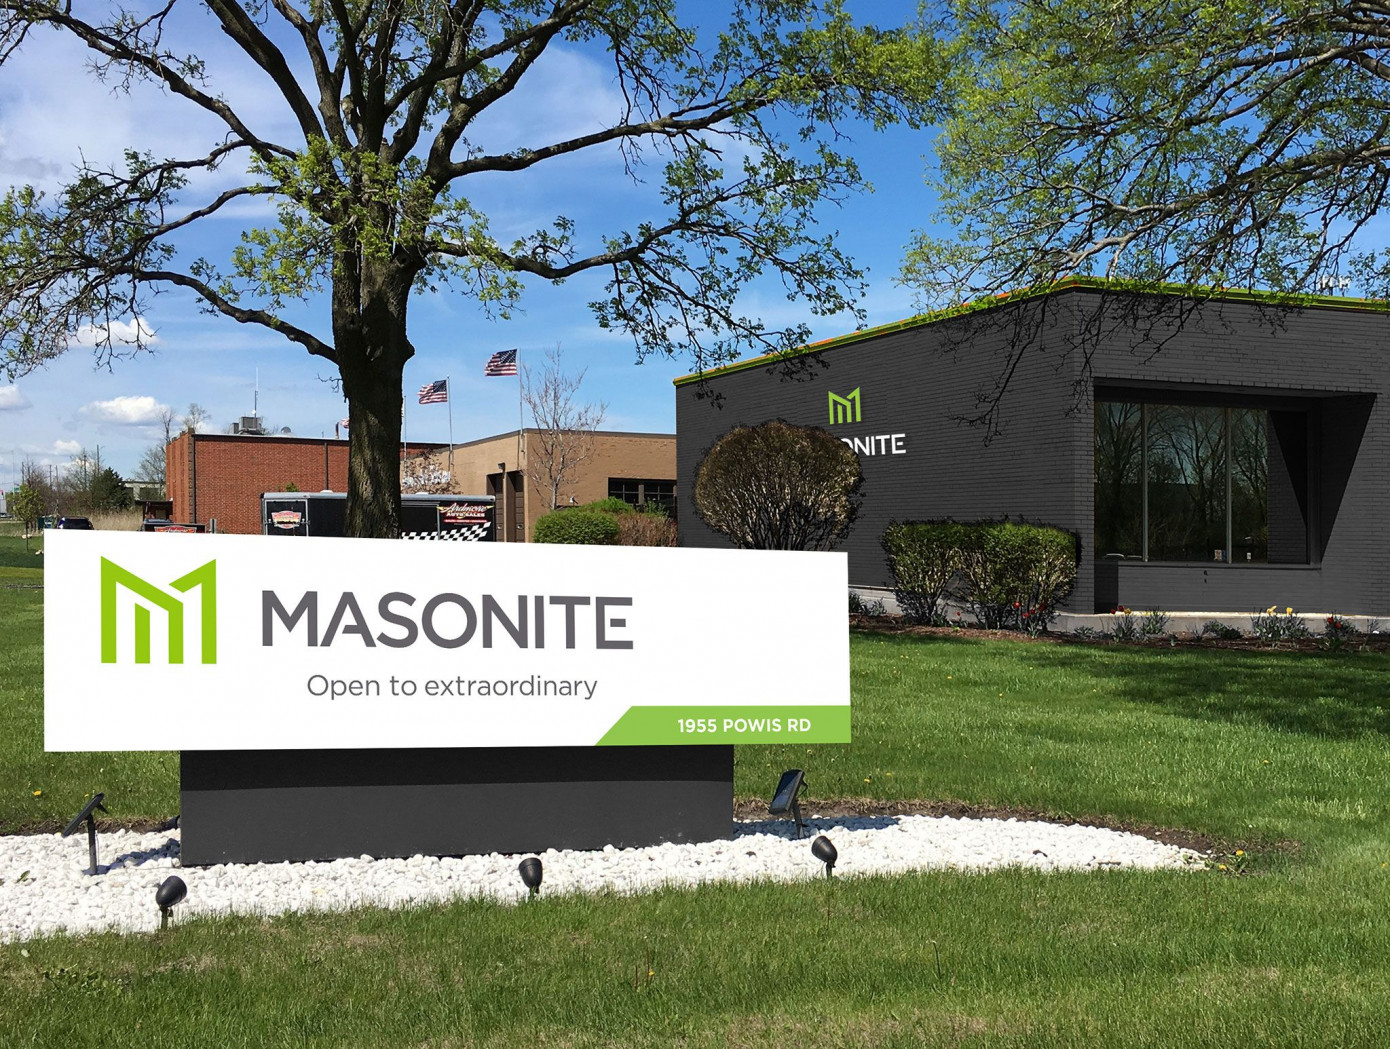 Masonite International"s 2Q net sales increased by 33% to $662 million